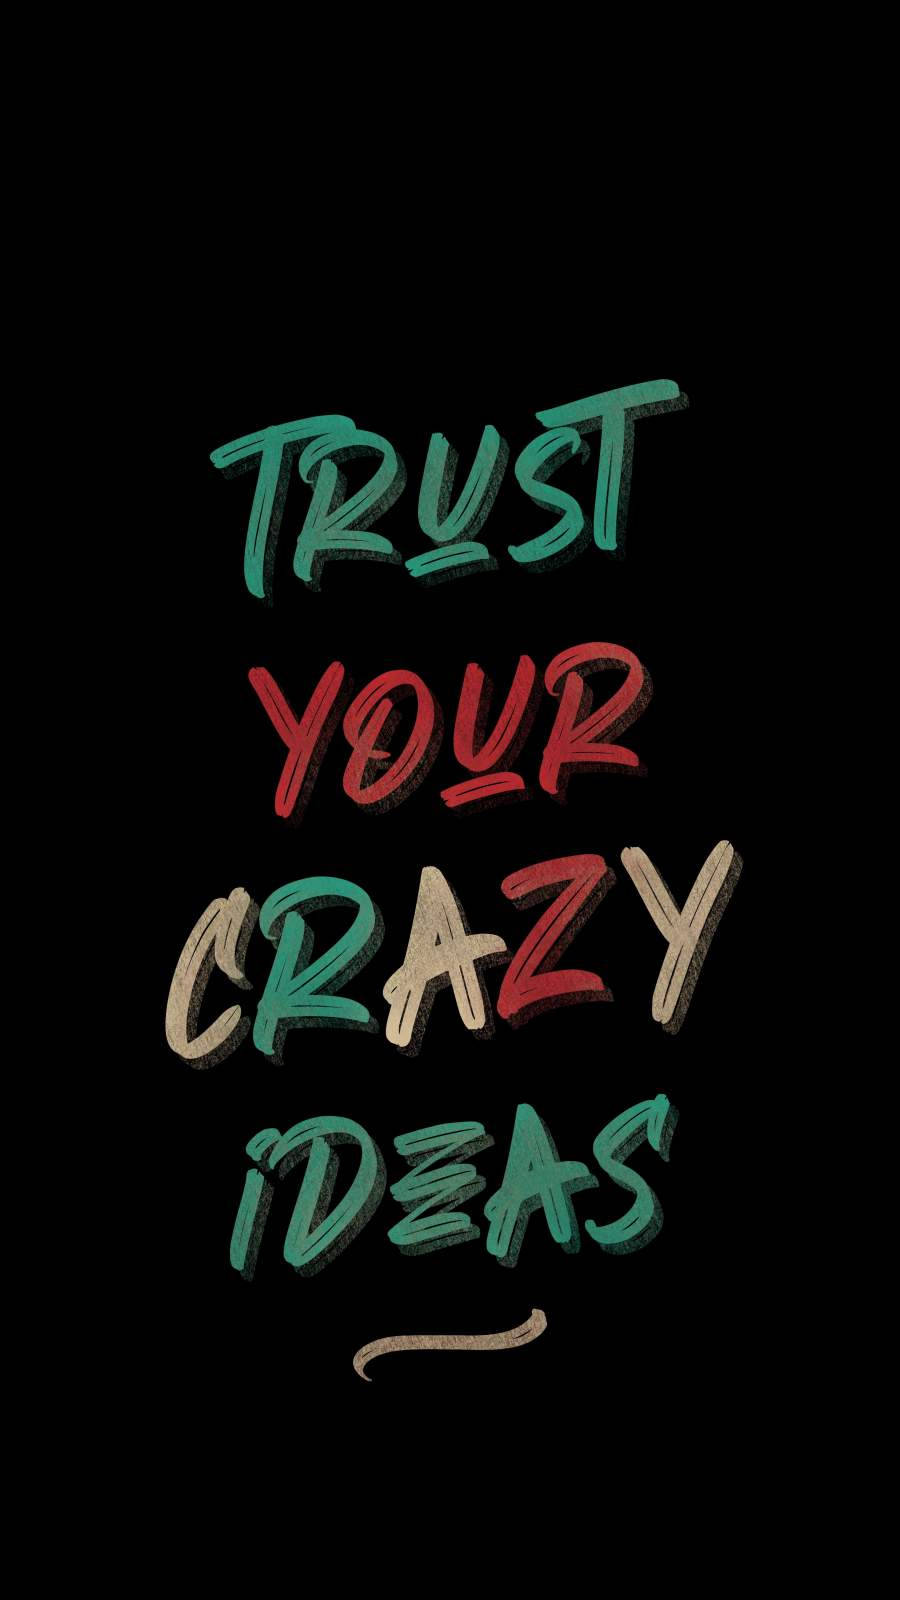 Trust Your Crazy Ideas Wallpaper